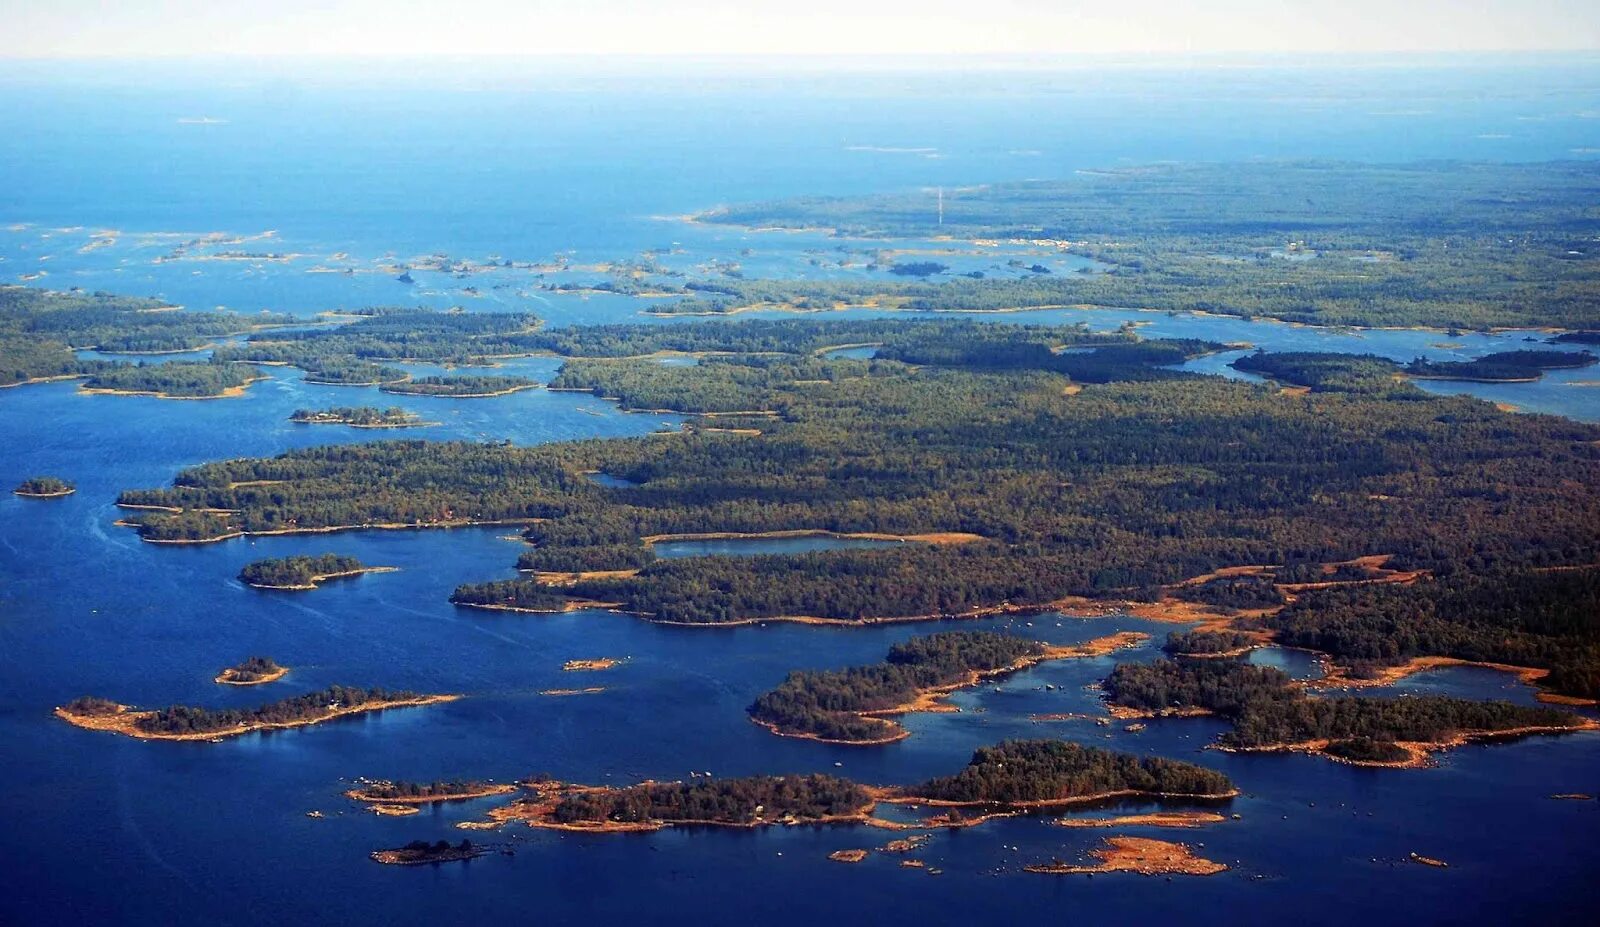 Озерное плато Финляндии. Финляндия Страна тысячи озер. Финляндия тысяча озер. Финляндия Страна 1000 озер. Названия финских озер